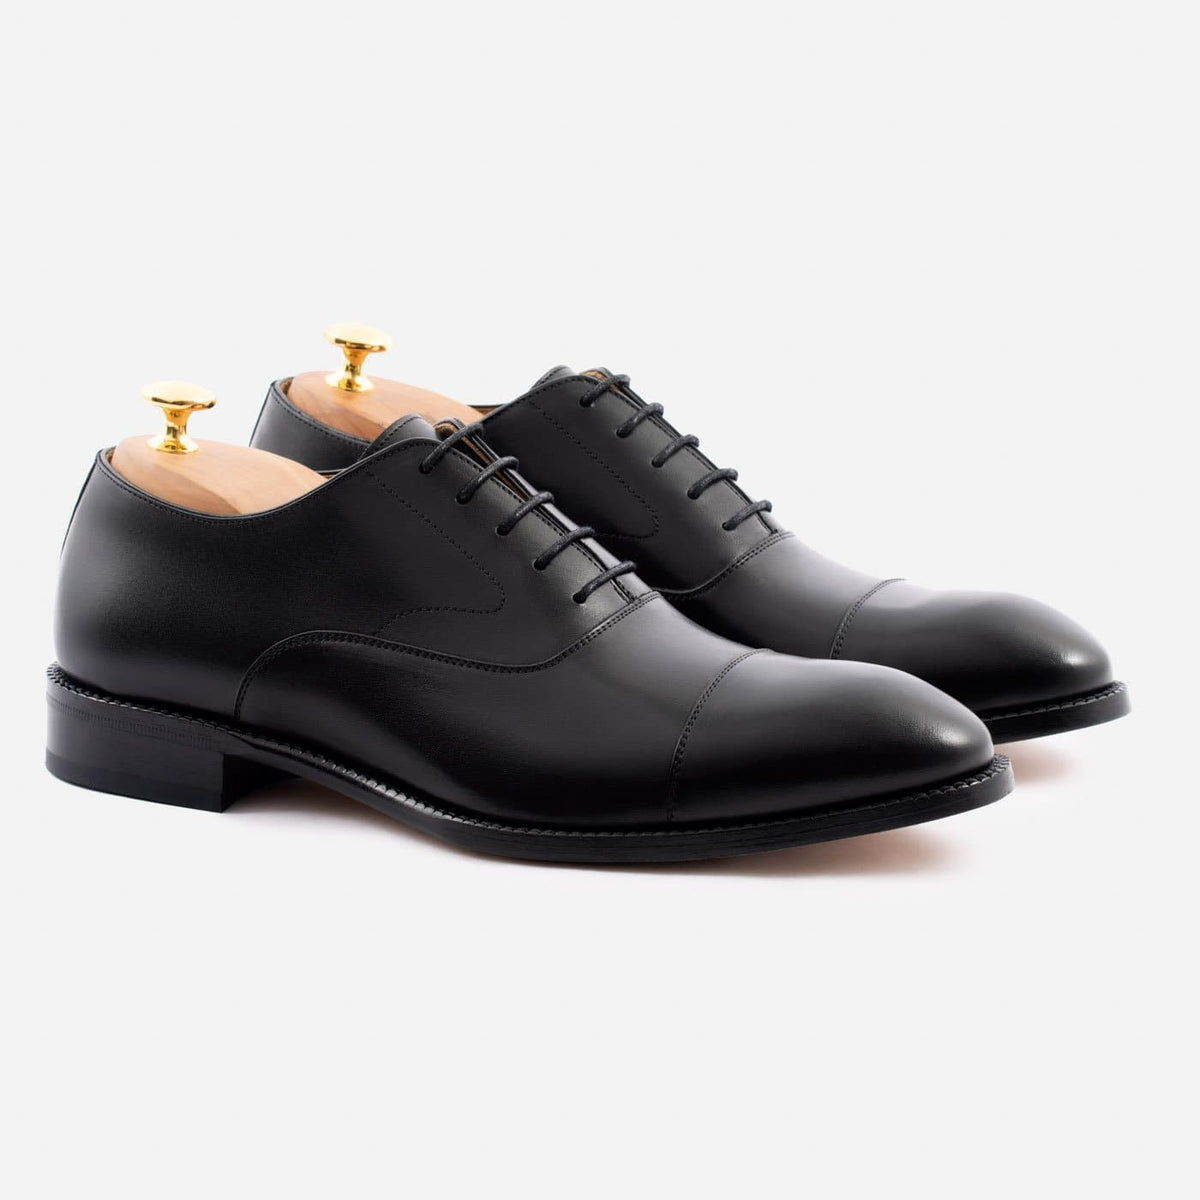 oxford black shoes